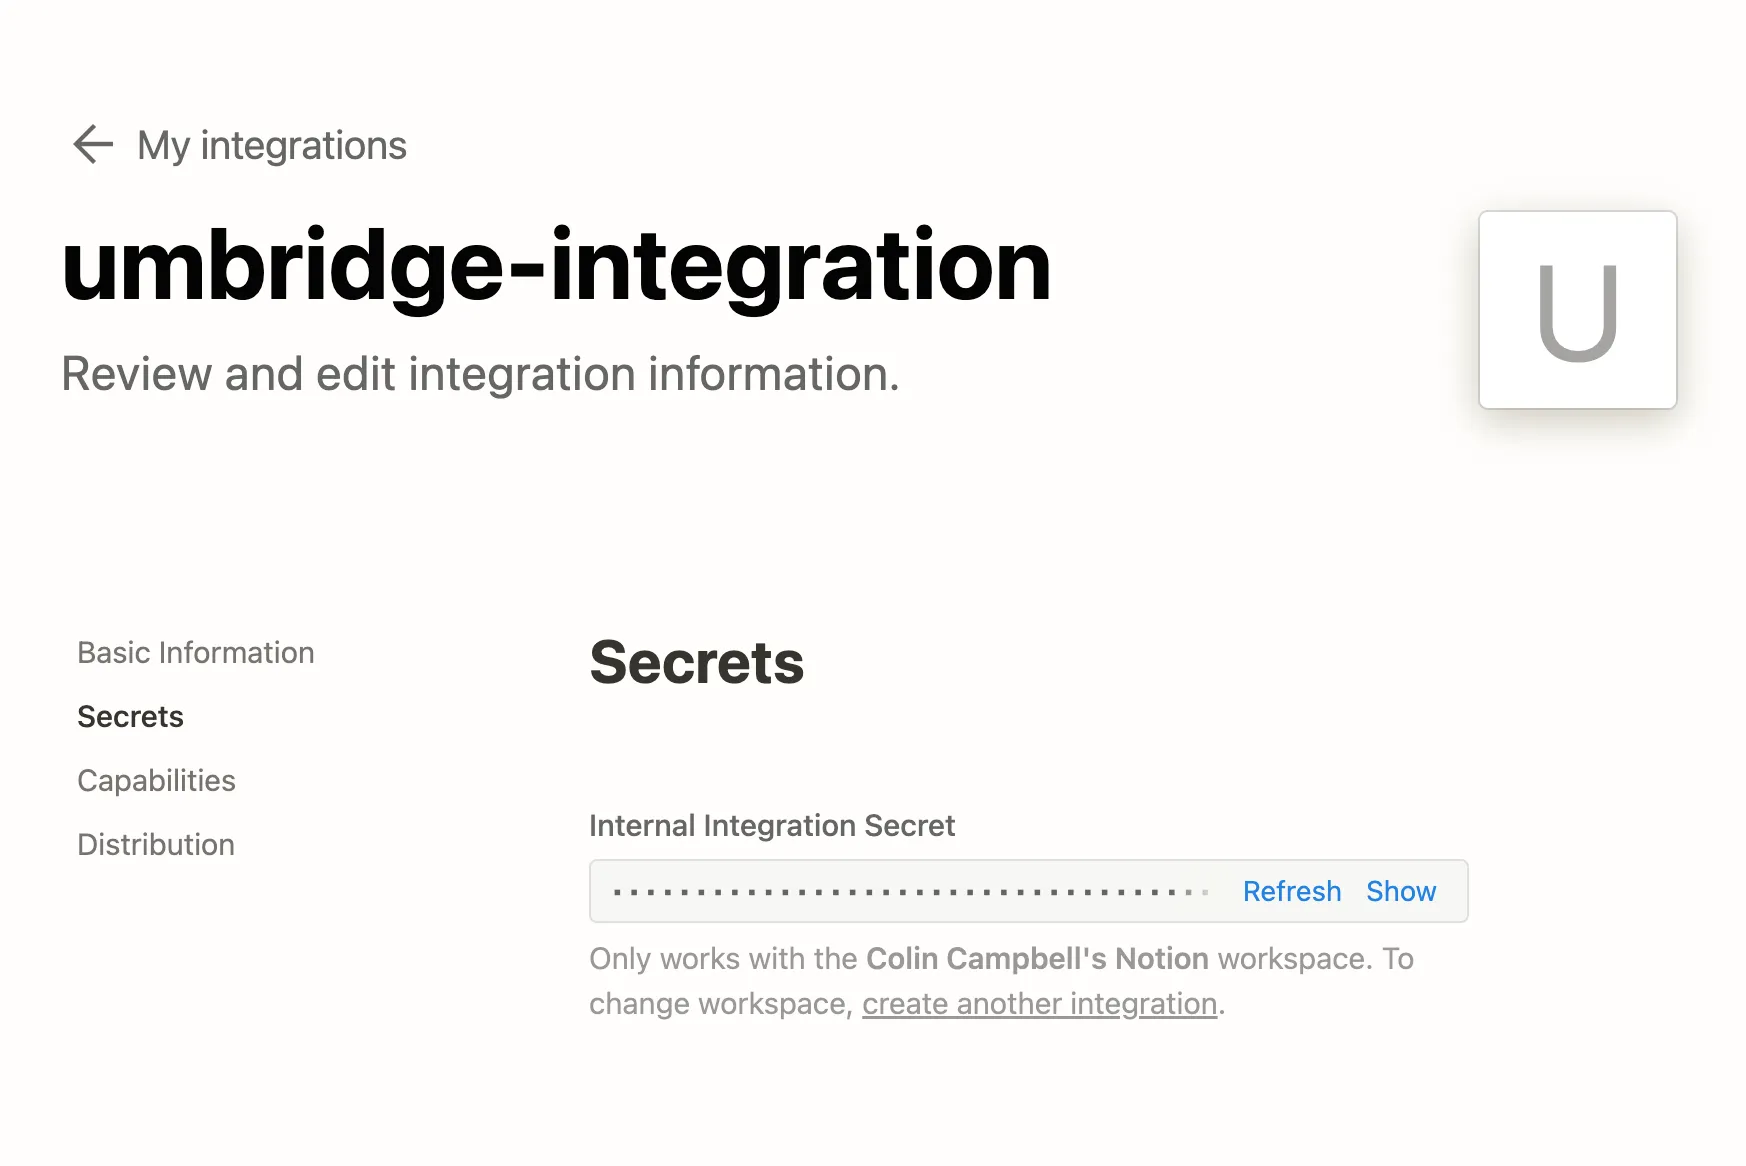 umbridge-integration-secret